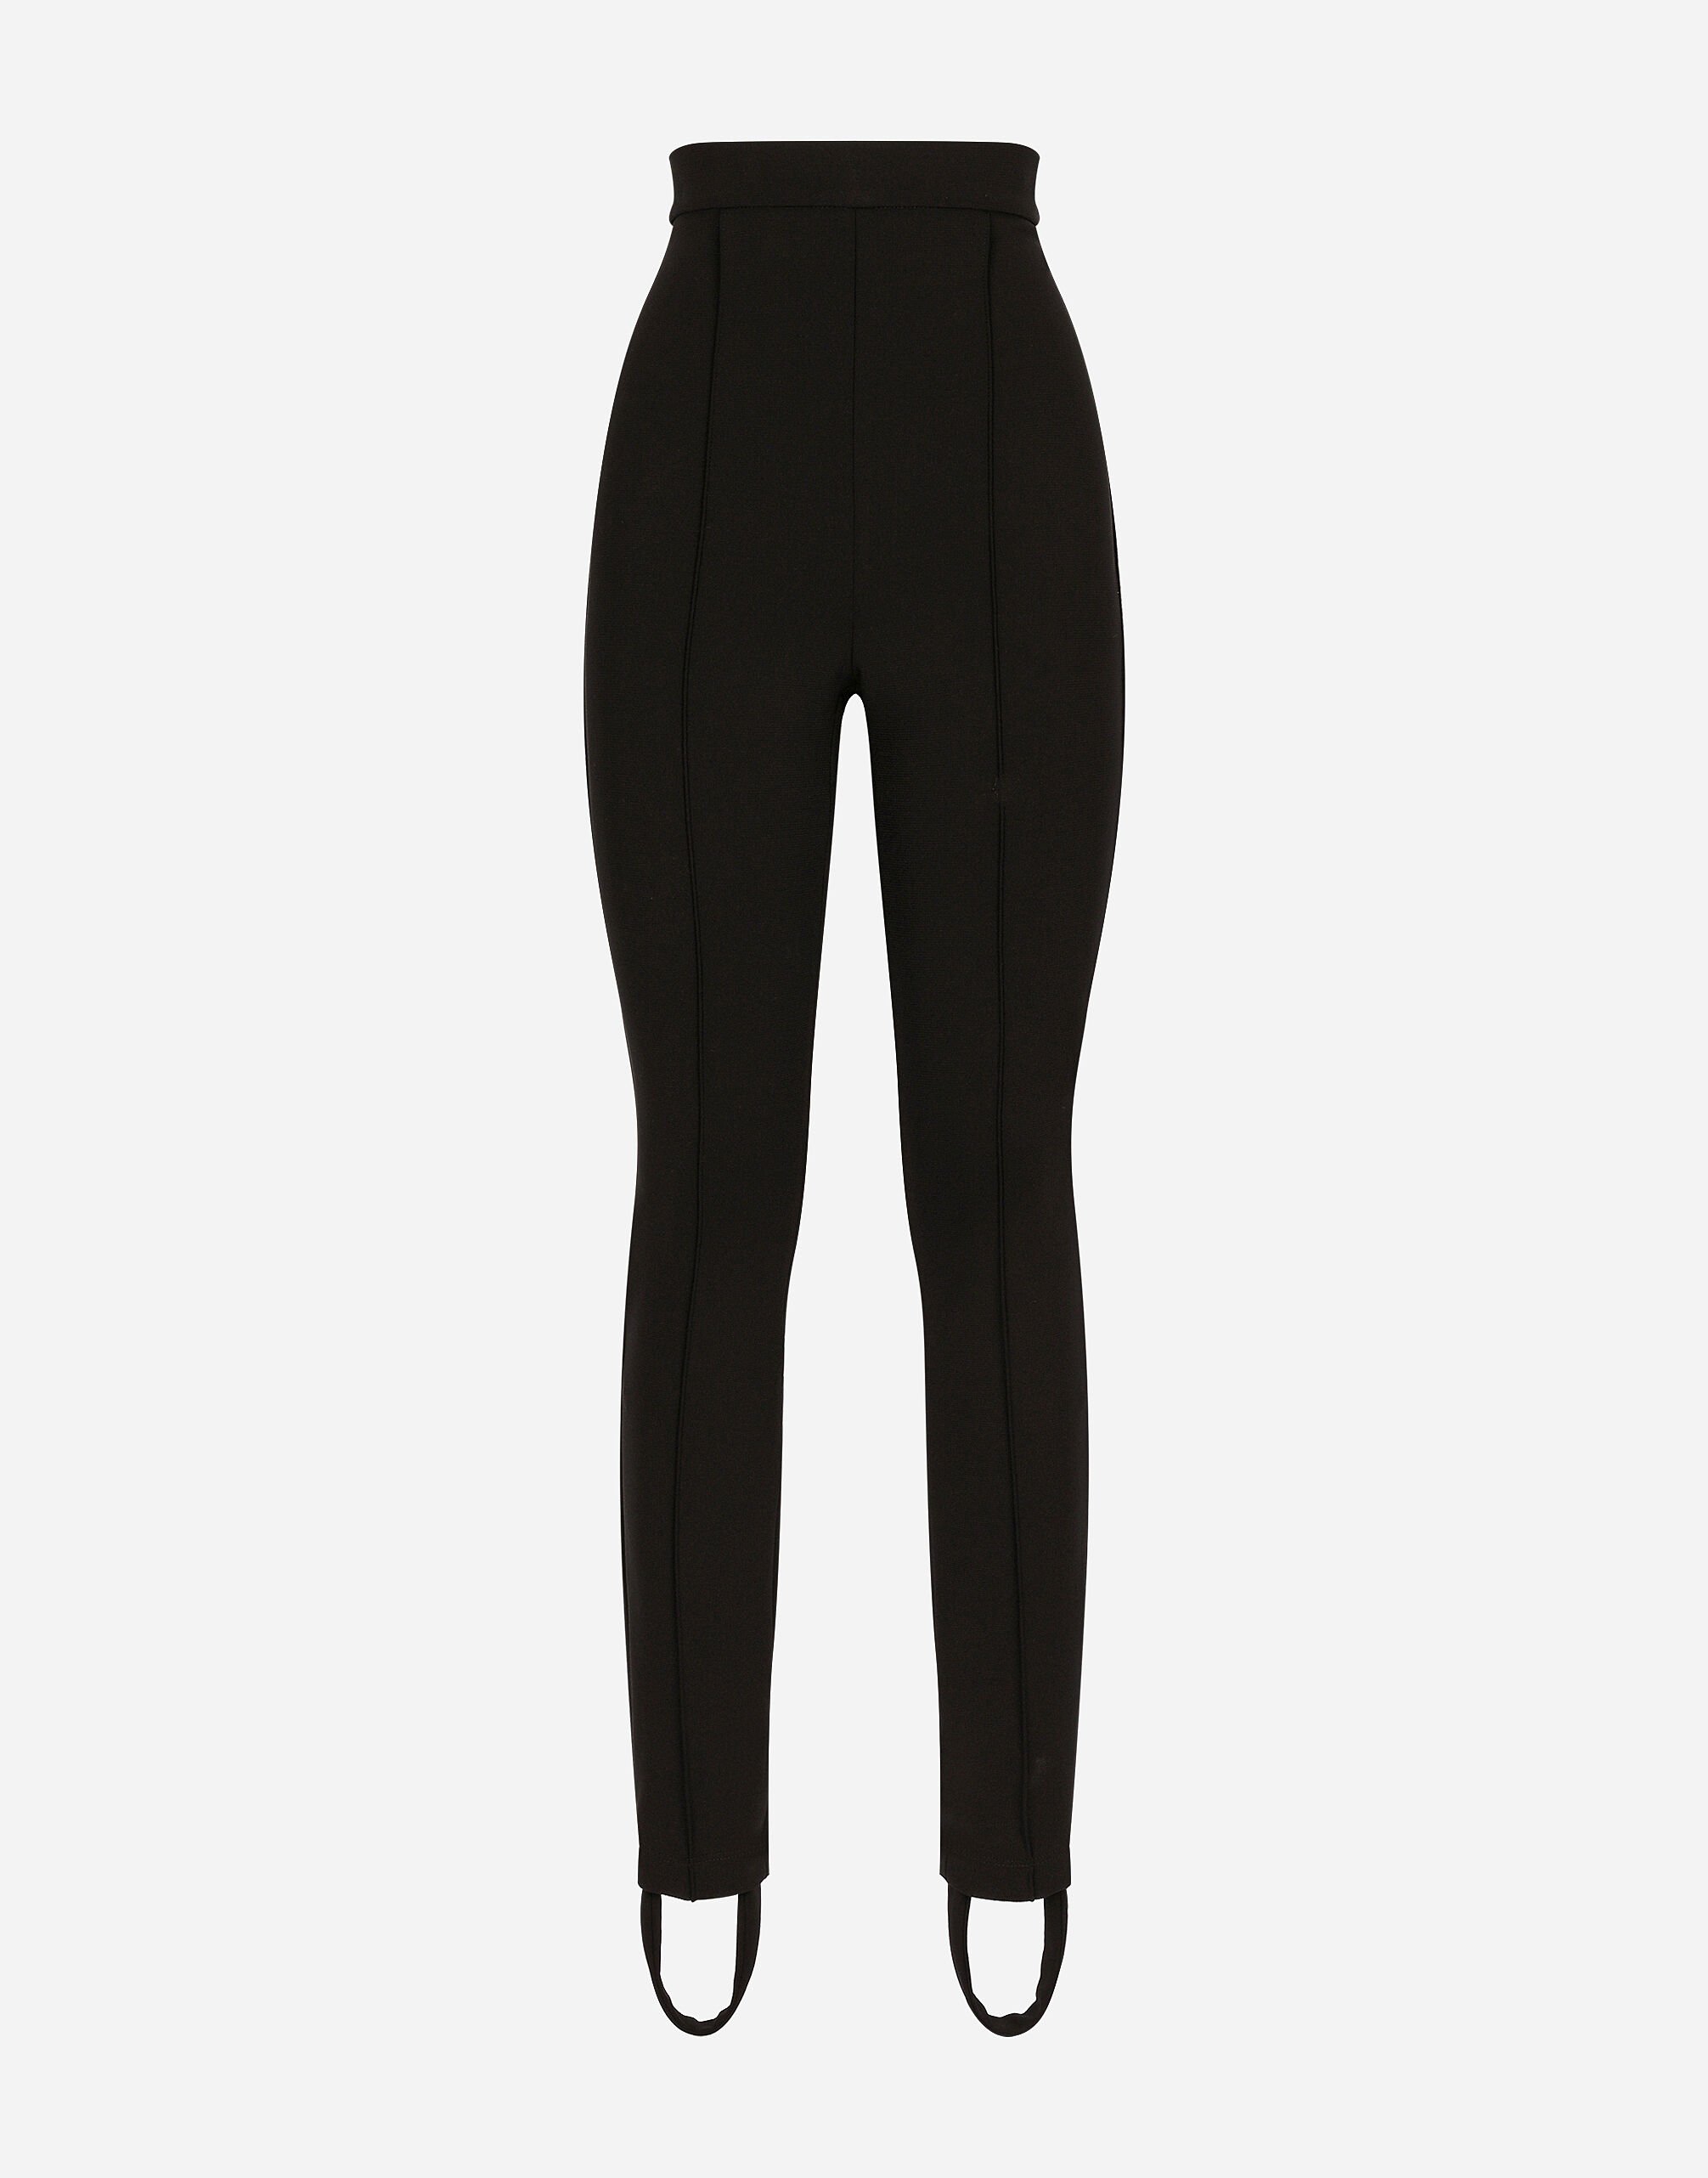 Dolce & Gabbana Jersey Milano rib leggings with stirrups Print FTCJUTHS5NO